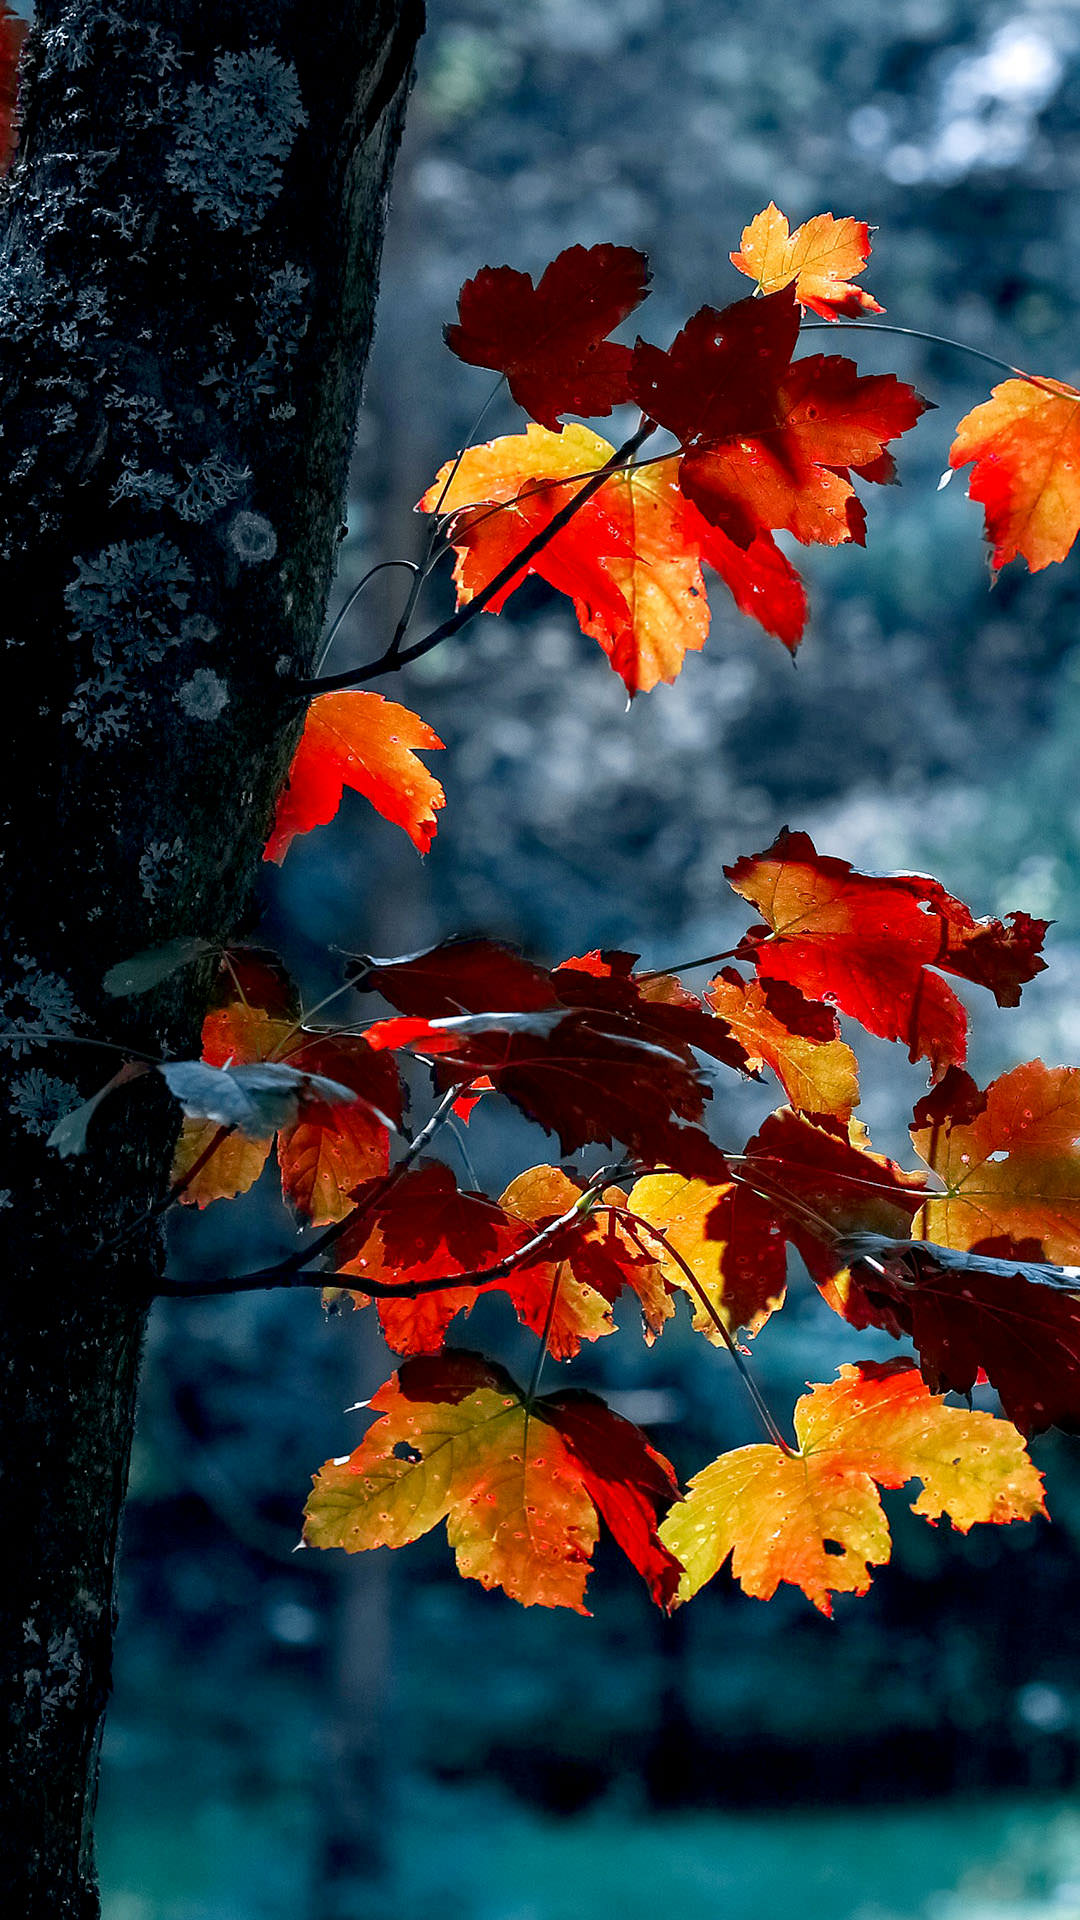 35+ Best Autumn iPhone Wallpapers - Templatefor